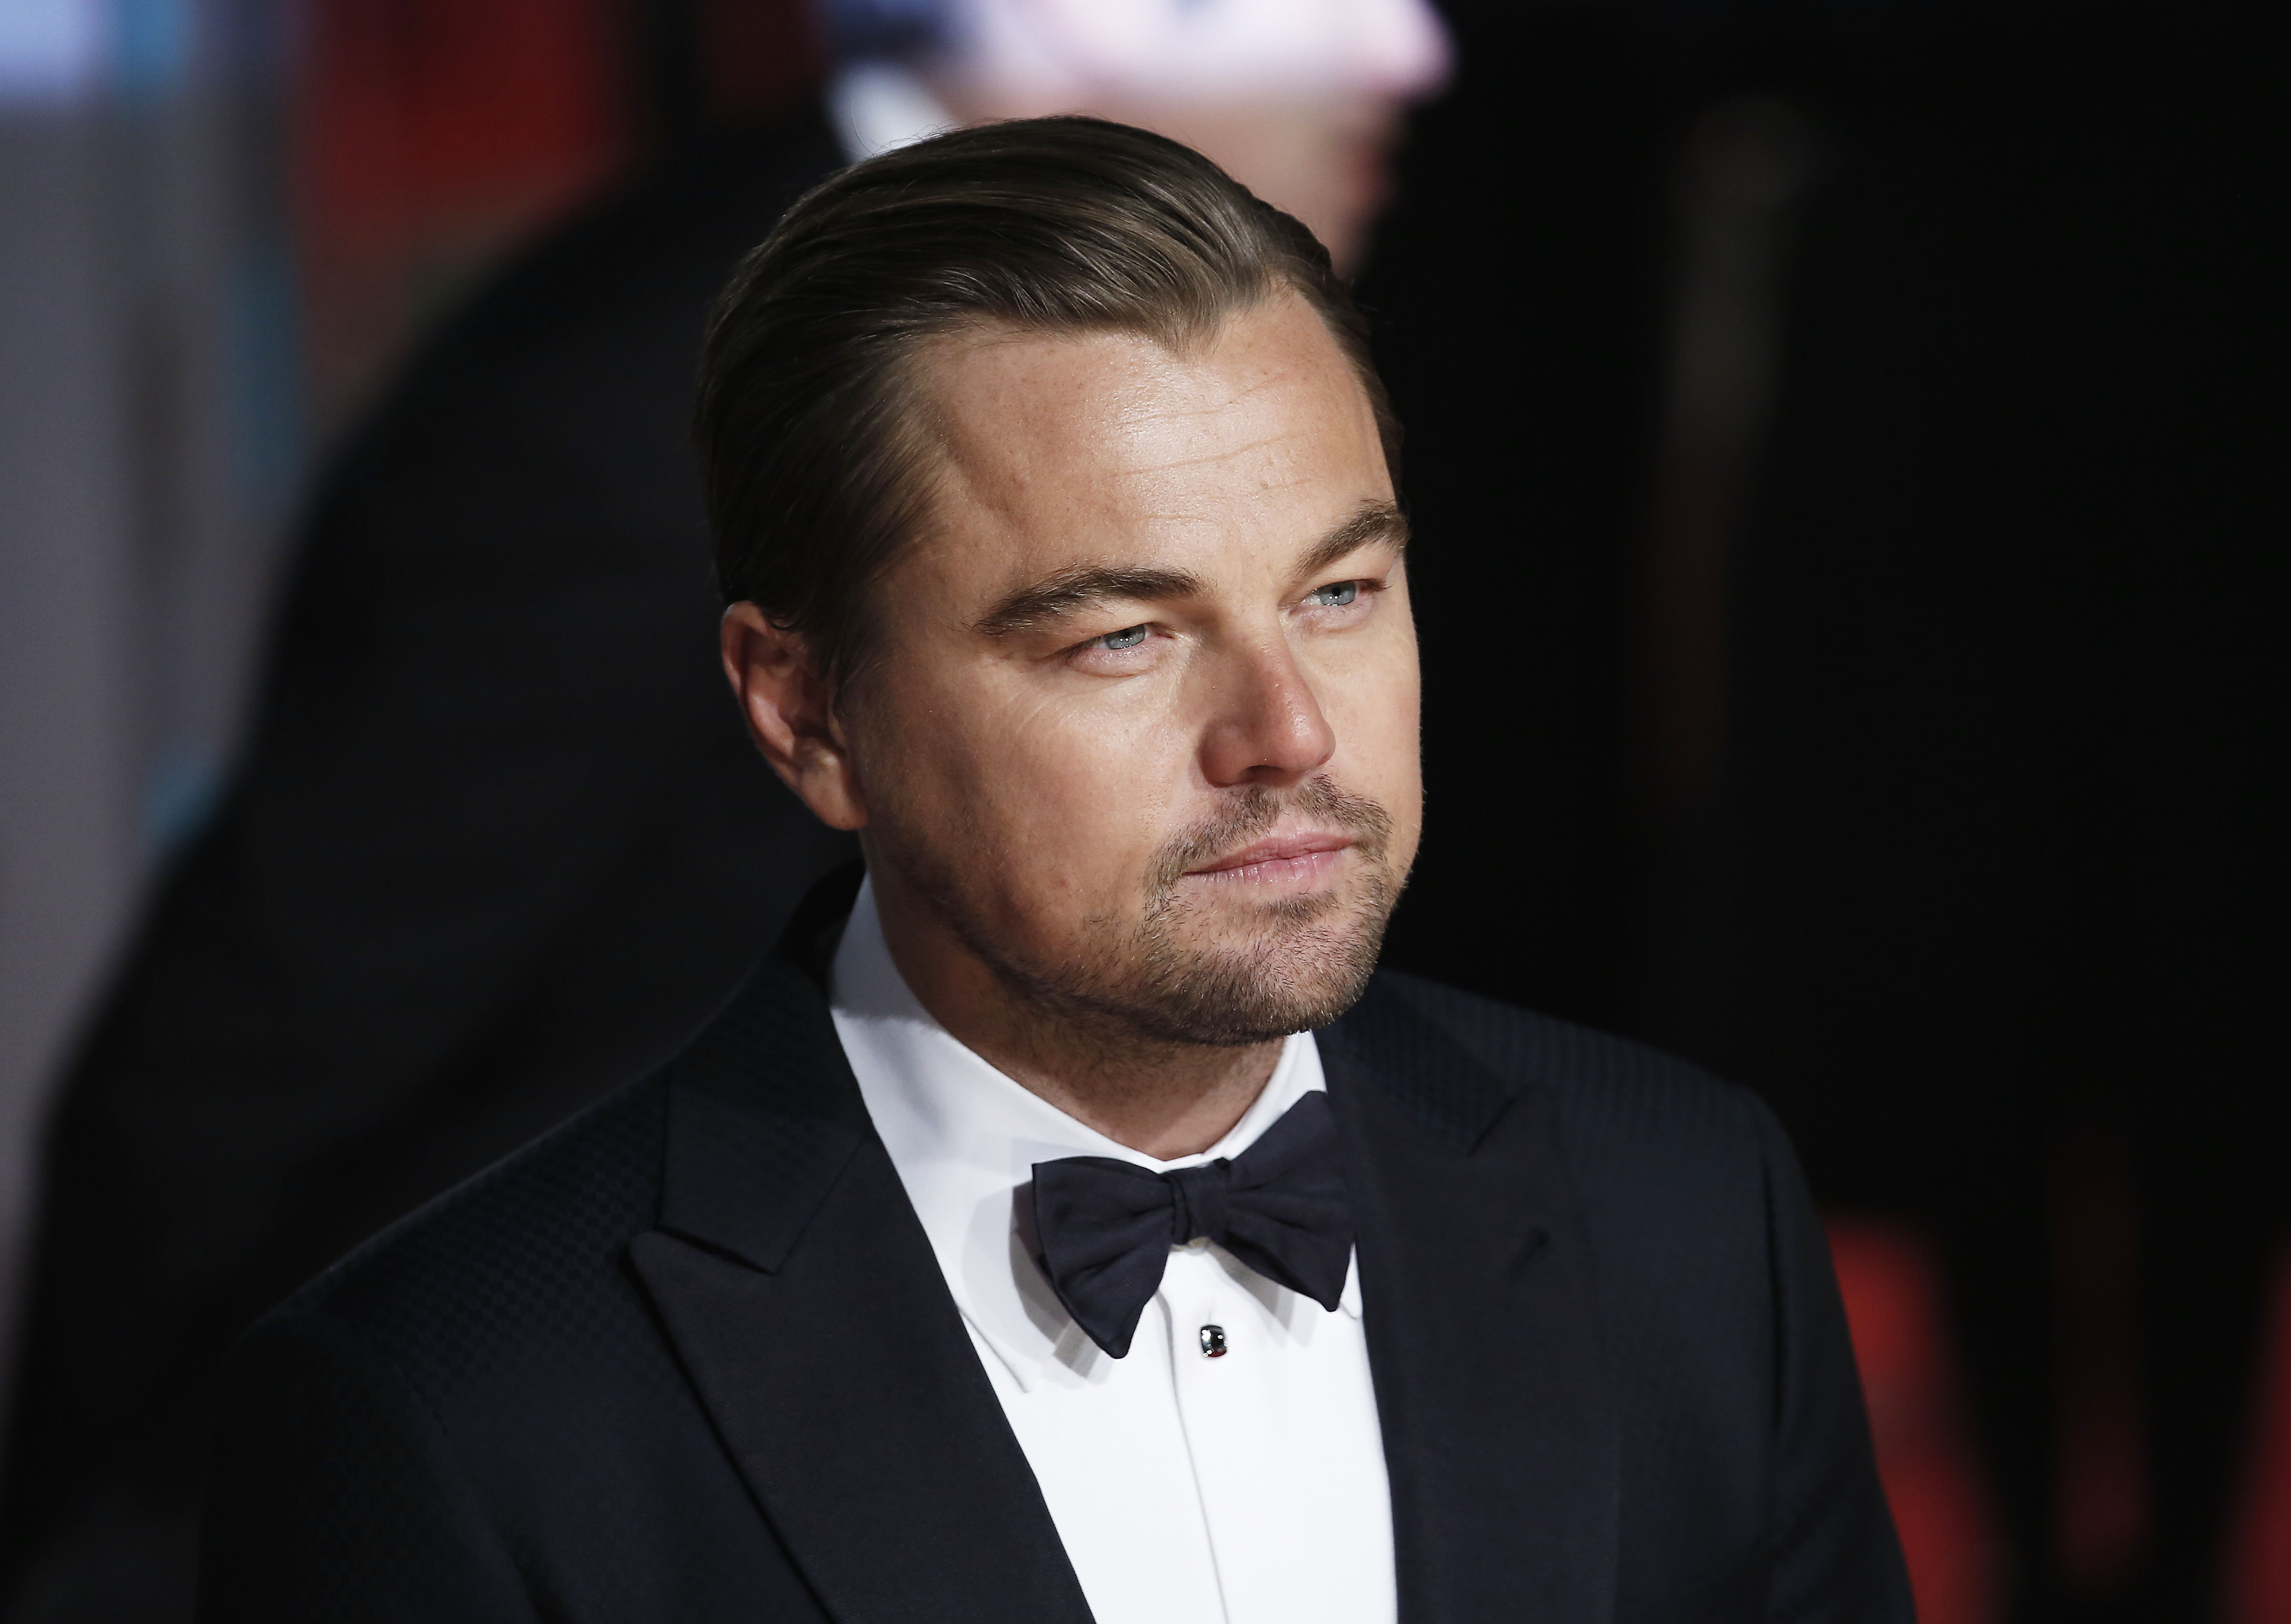 Wallpaper Leonardo DiCaprio, Oscar 2016, Oscar, Most popular celebs, actor ...5032 x 3568